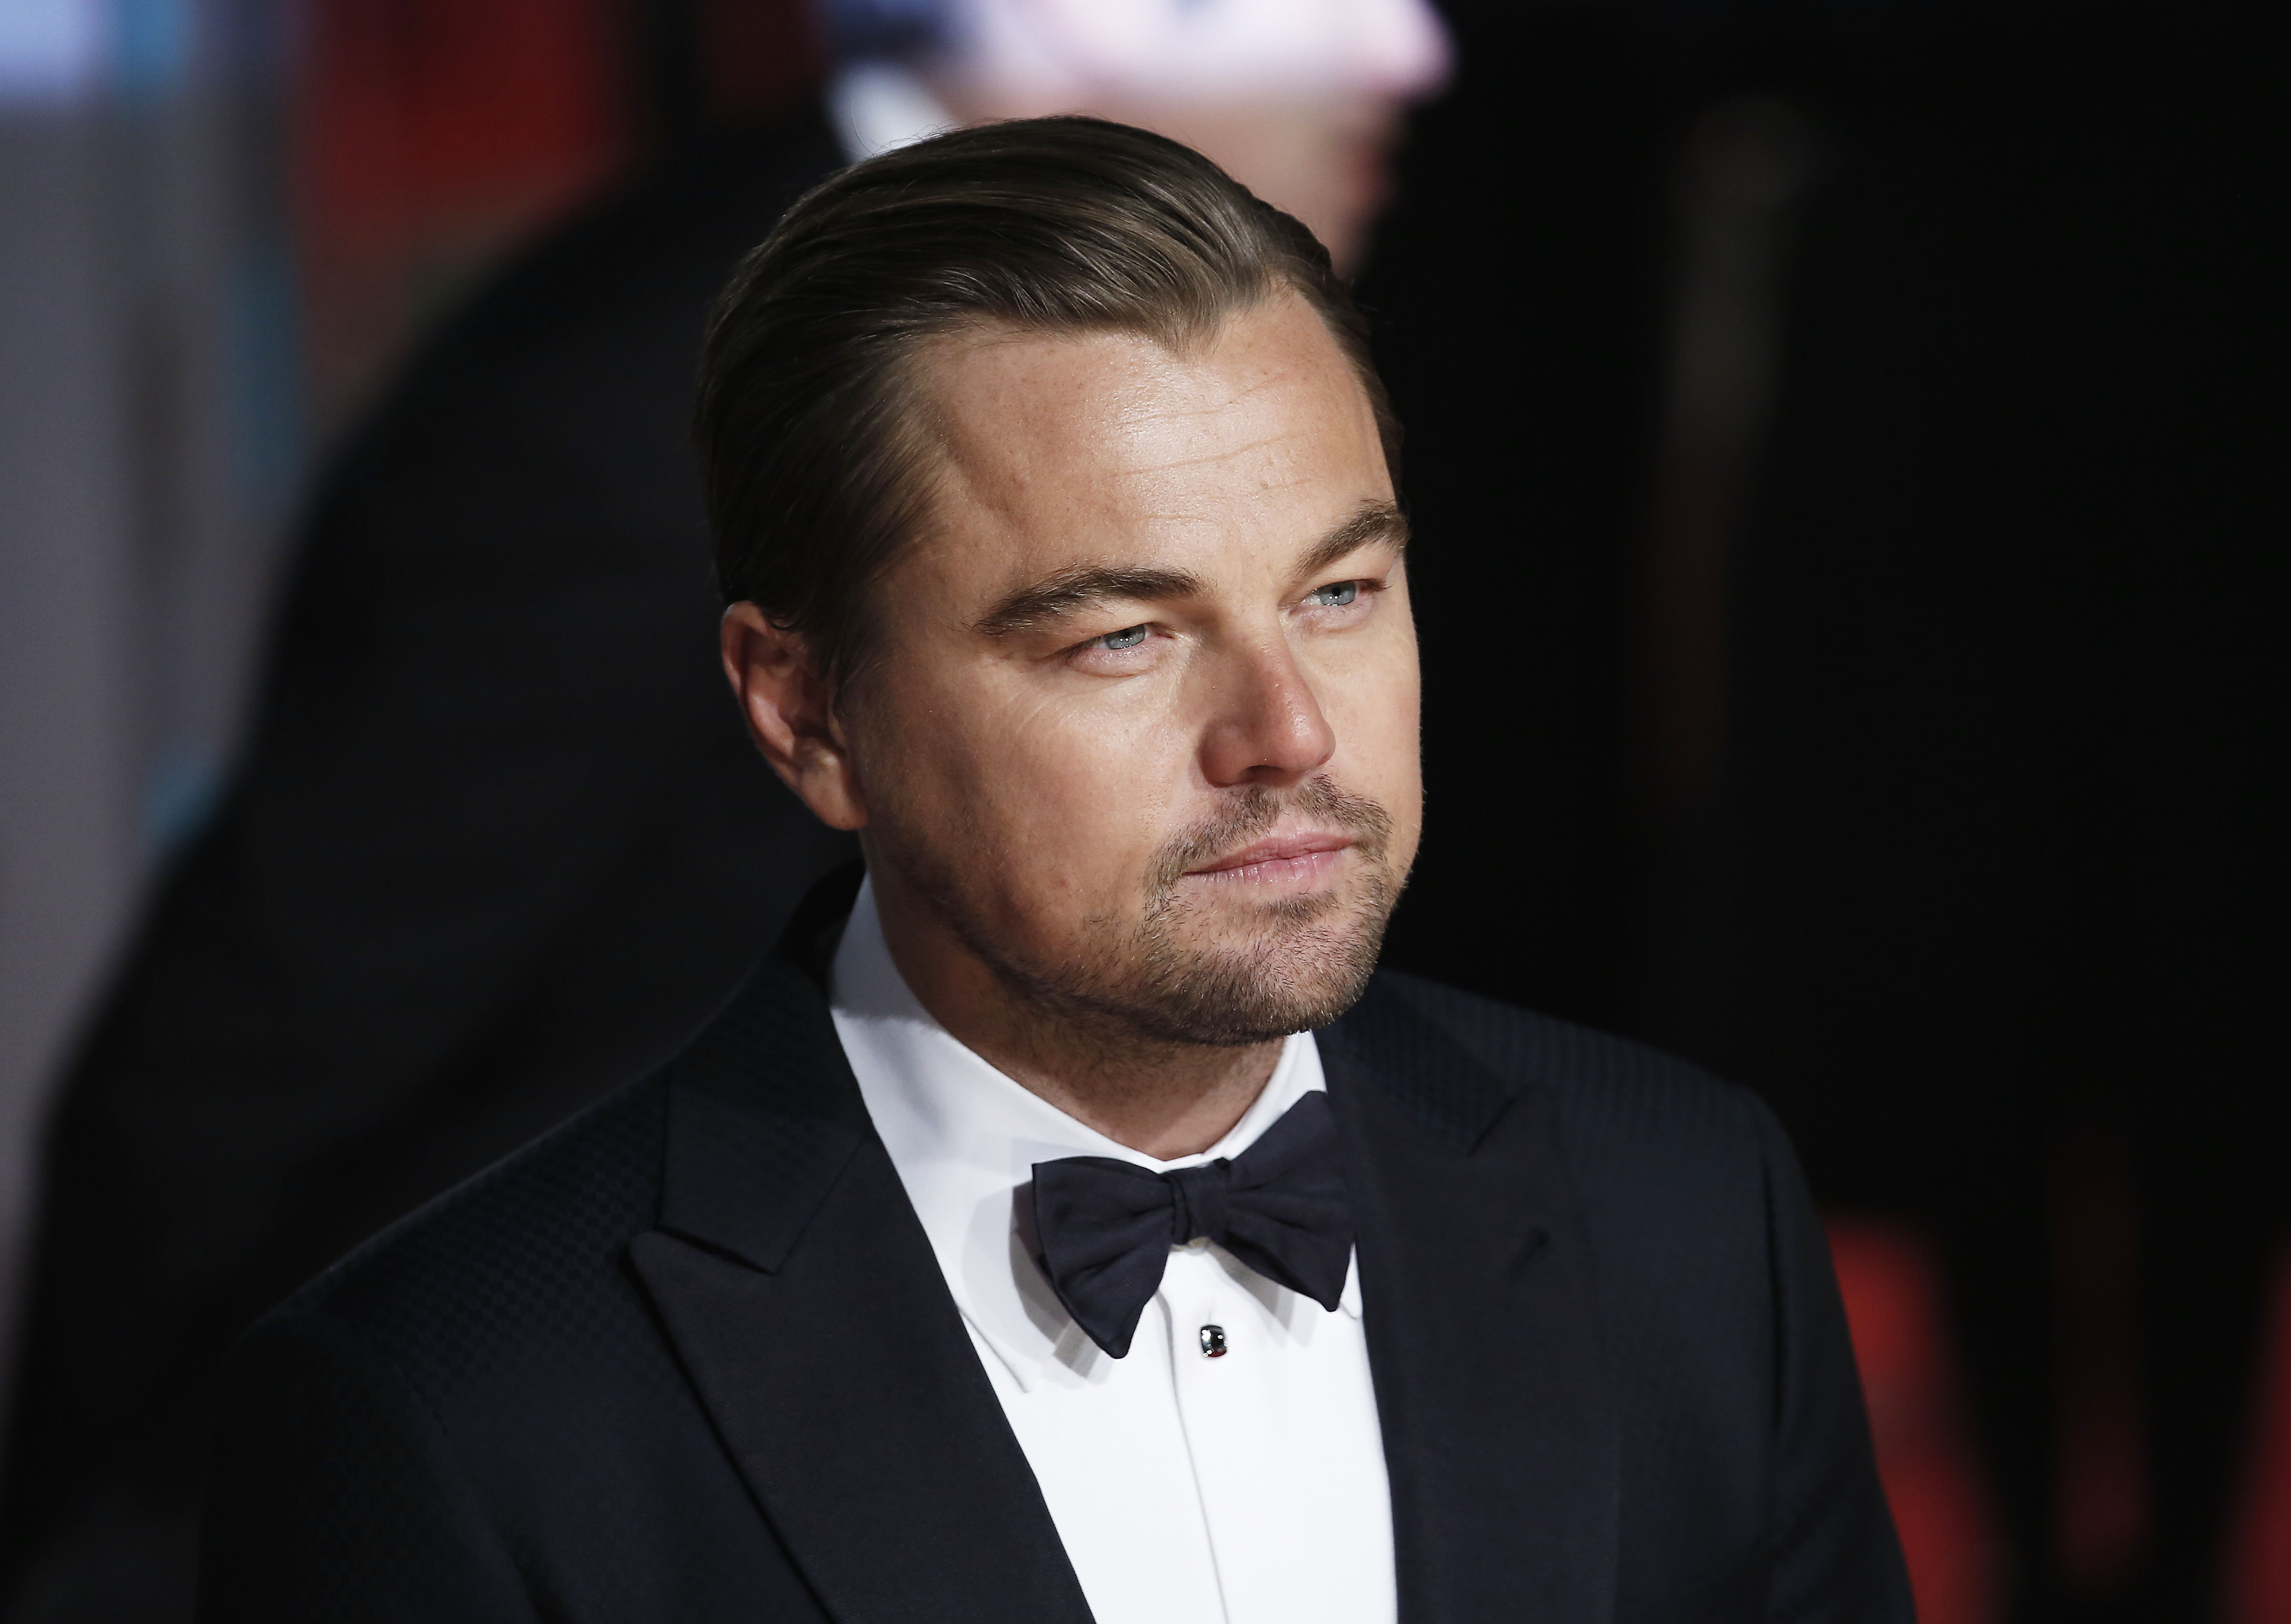 Wallpaper Leonardo DiCaprio, Oscar 2016, Oscar, Most popular celebs, actor ...5032 x 3568